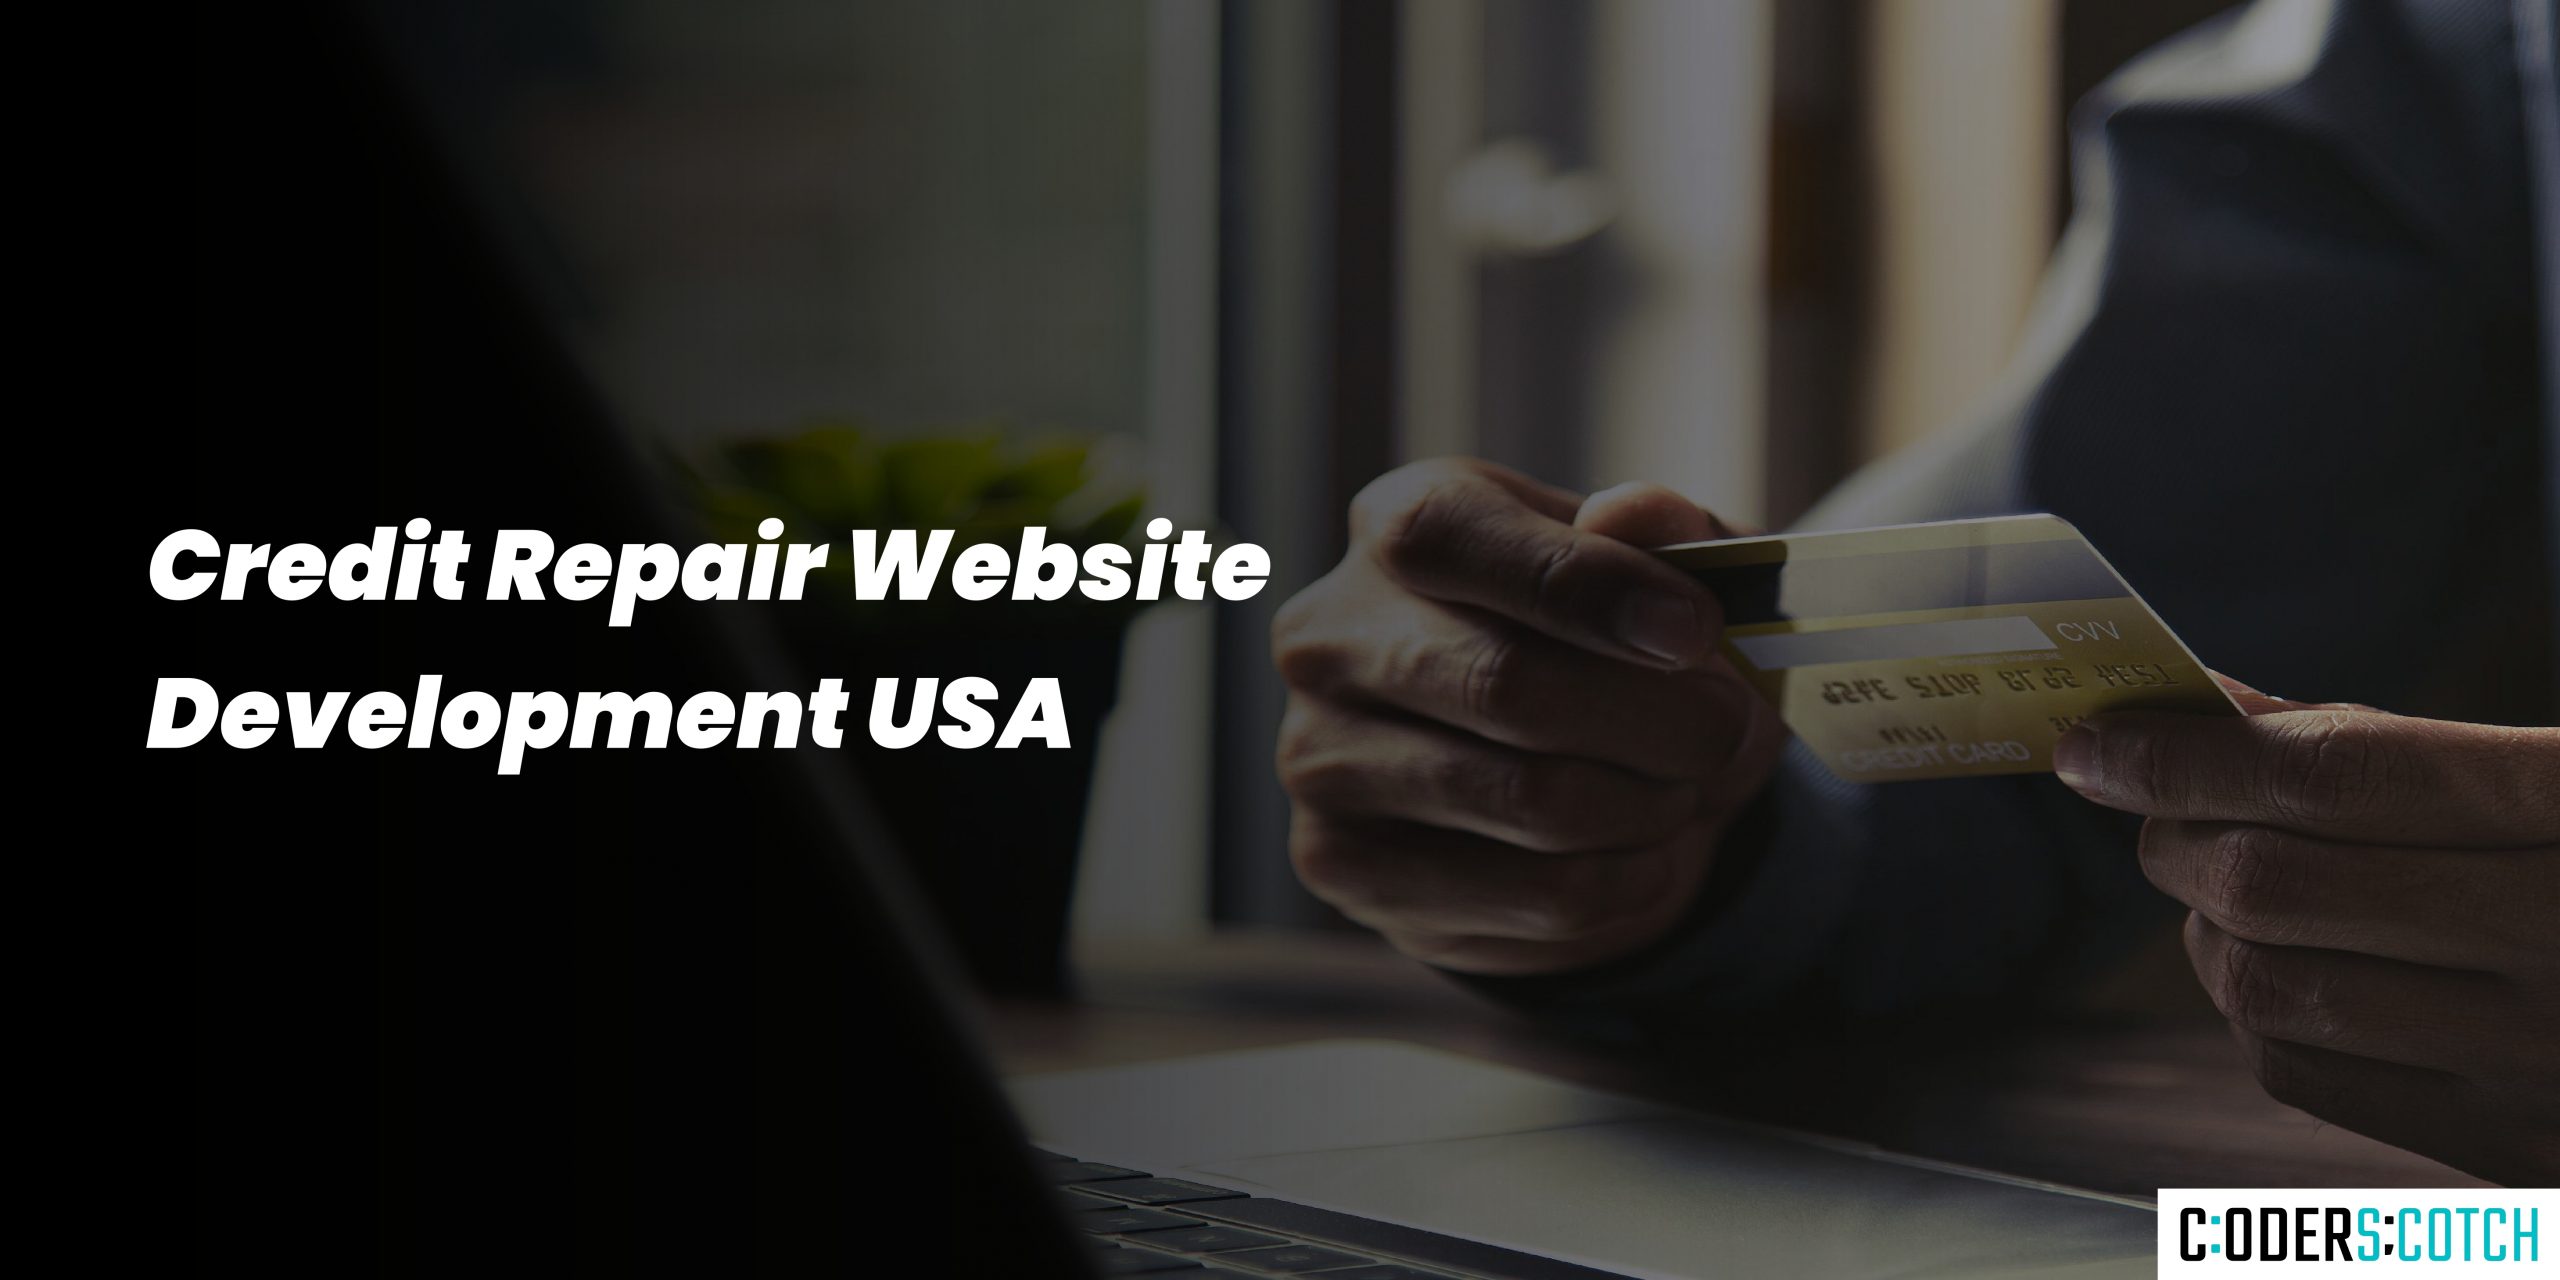 Credit Repair Website Development USA